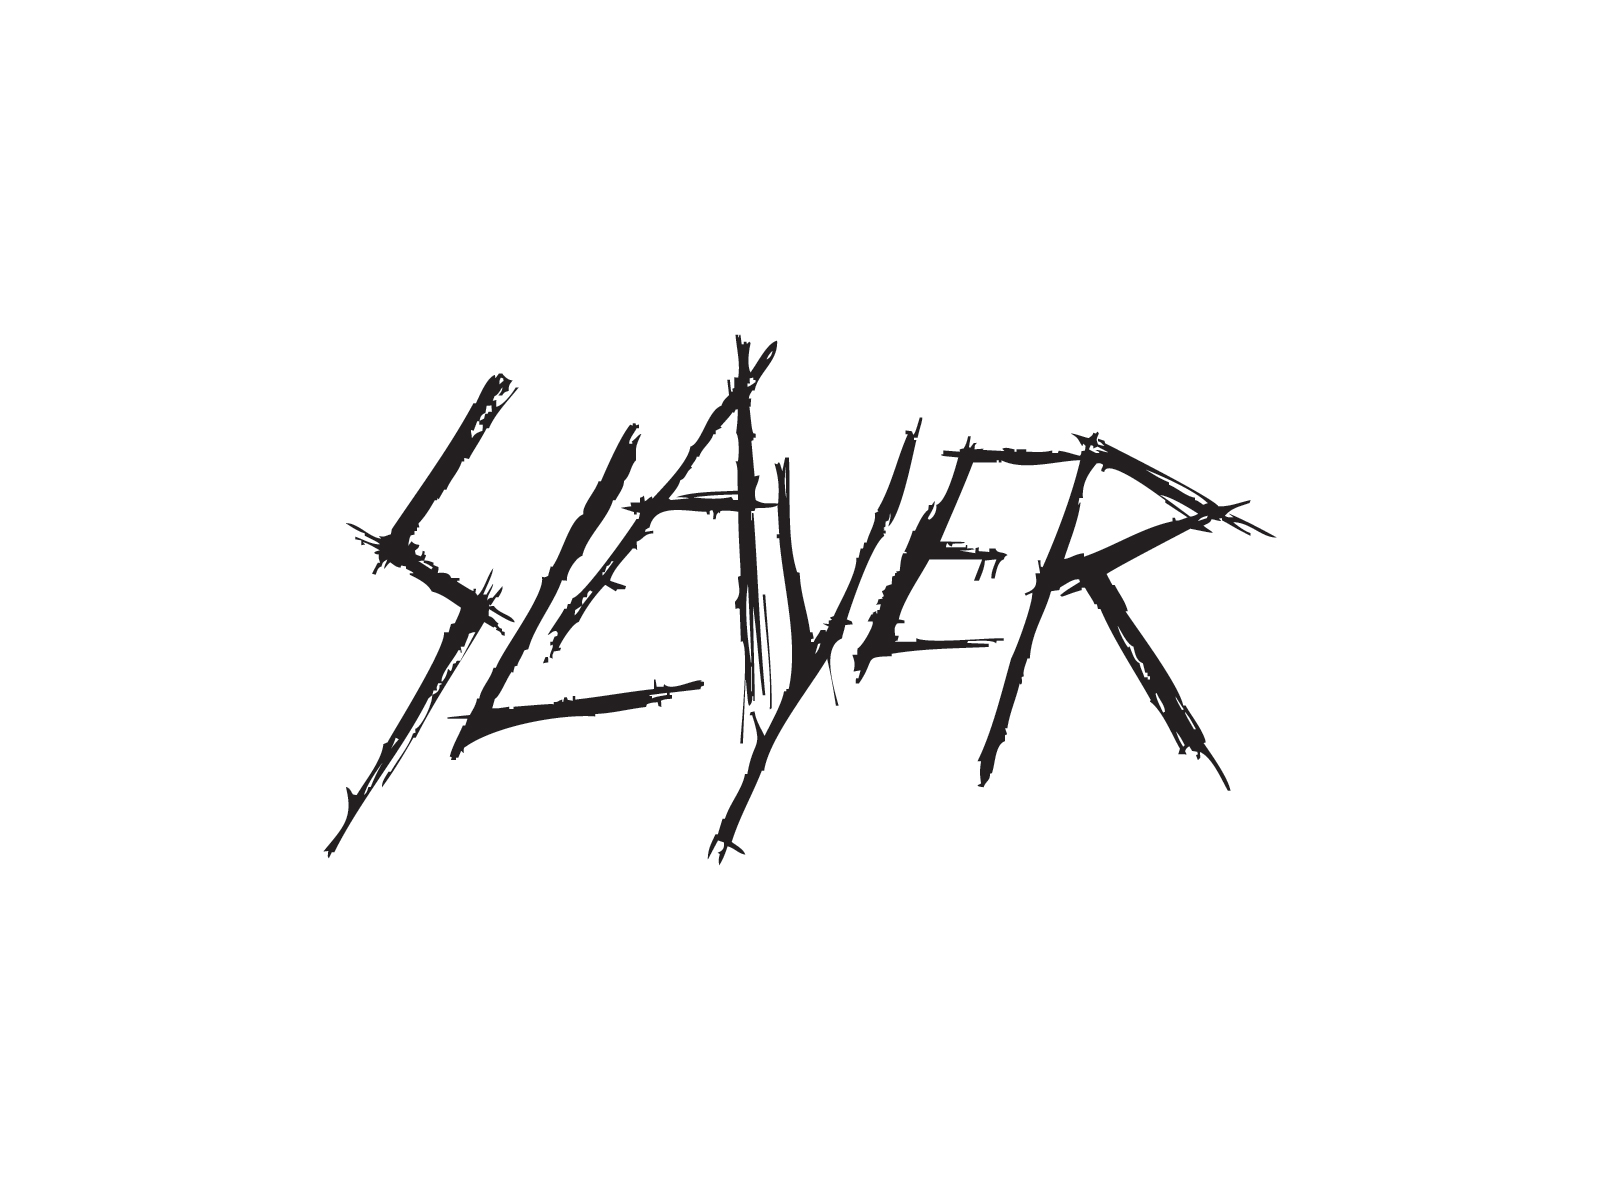 slayer, Groups, Bands, Music, Heavy, Metal, Death, Hard, Rock, Album, Covers Wallpaper